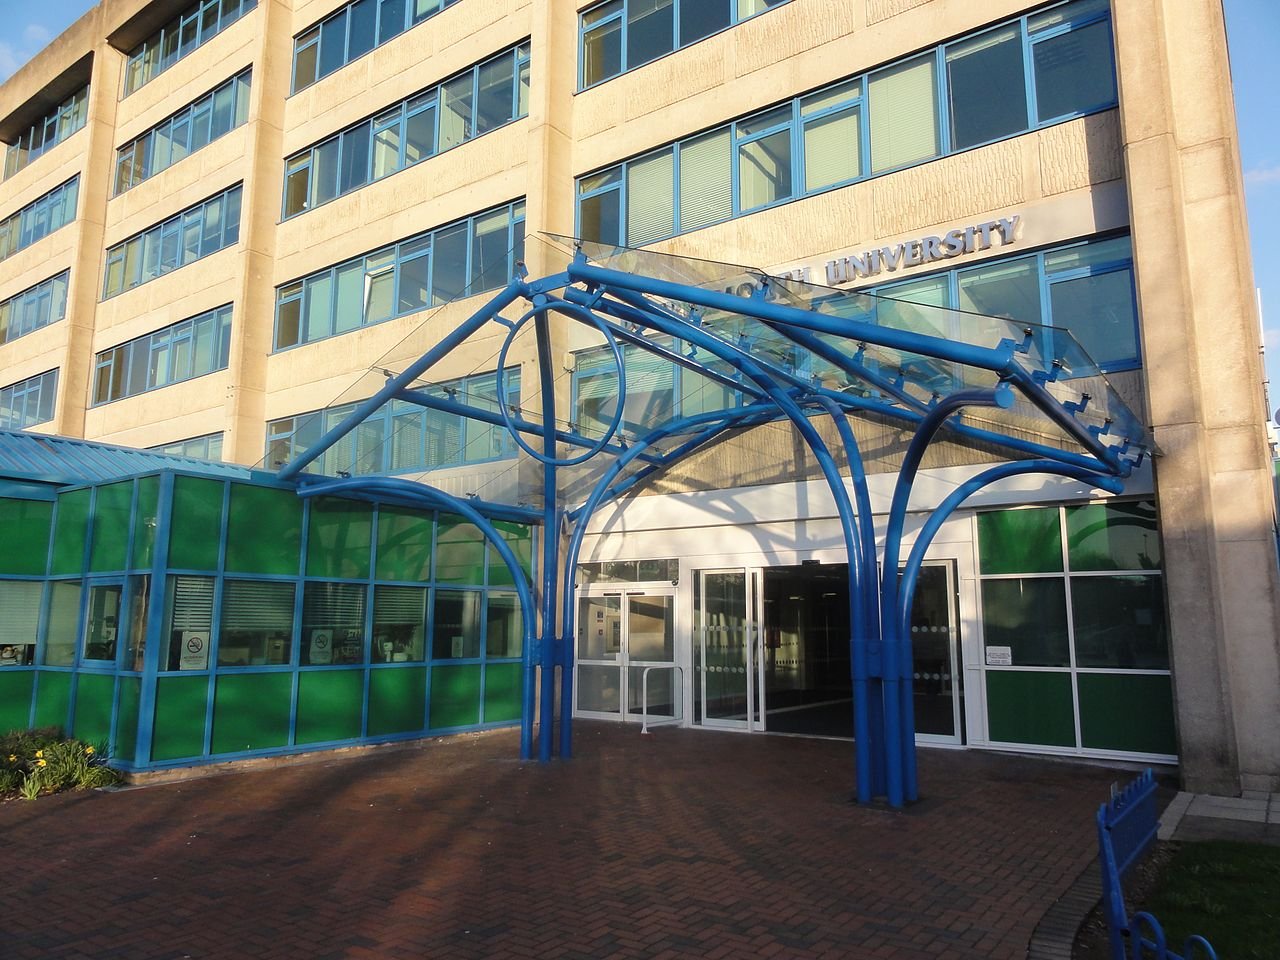 Entrance to Bournemouth University building